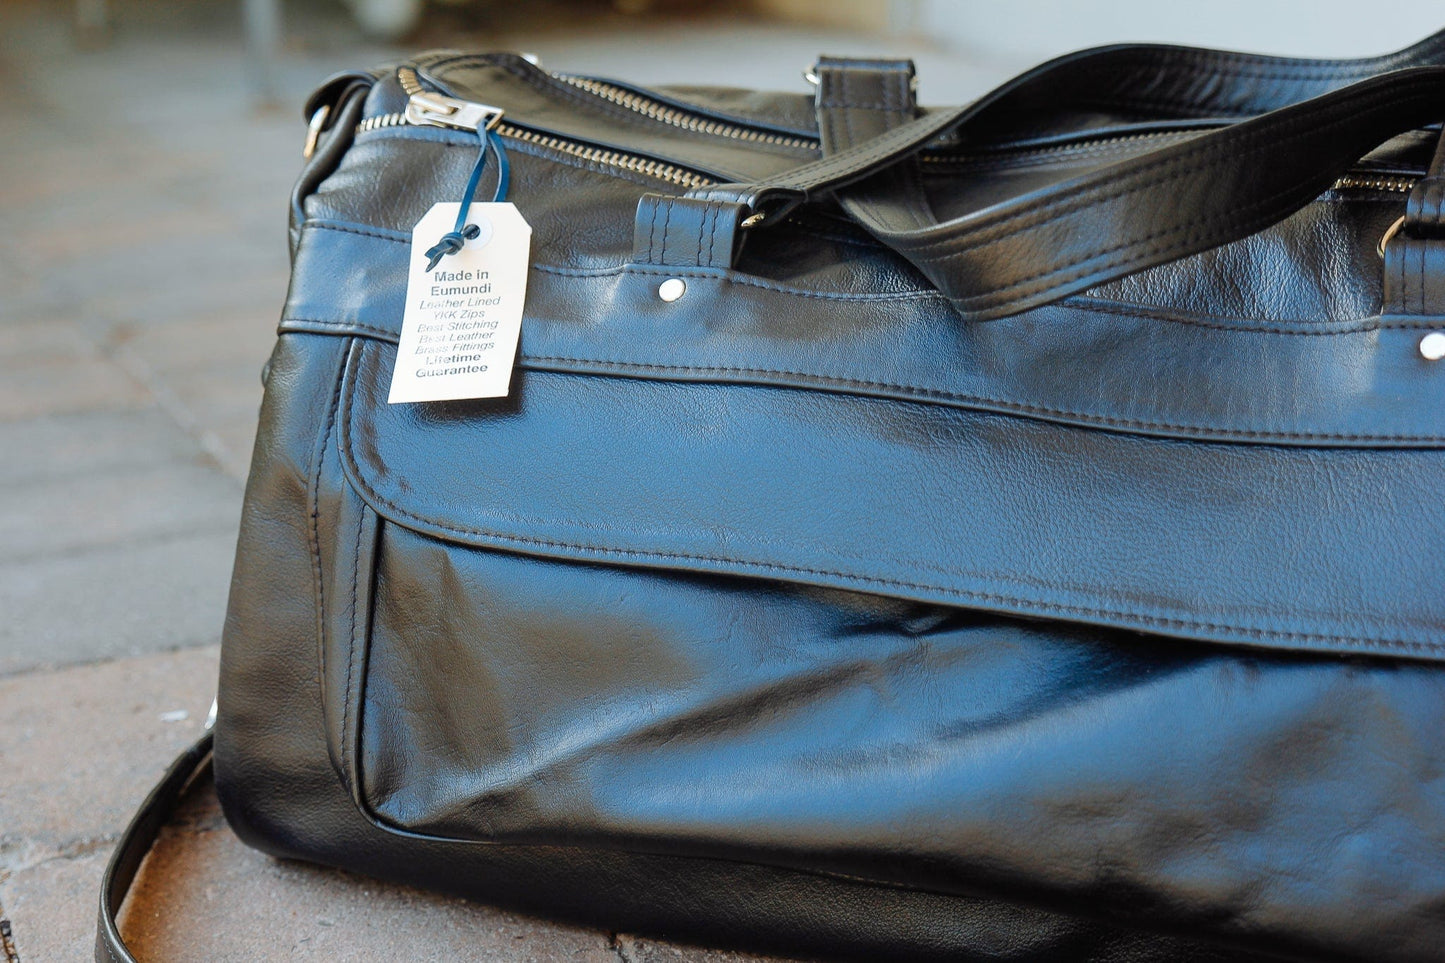 The Real McCaul Travel Bag Classic Overnight Travel Bag - Kangaroo Australian Made Australian Owned Large Overnight Travel Duffel Bag Leather Made in Australia